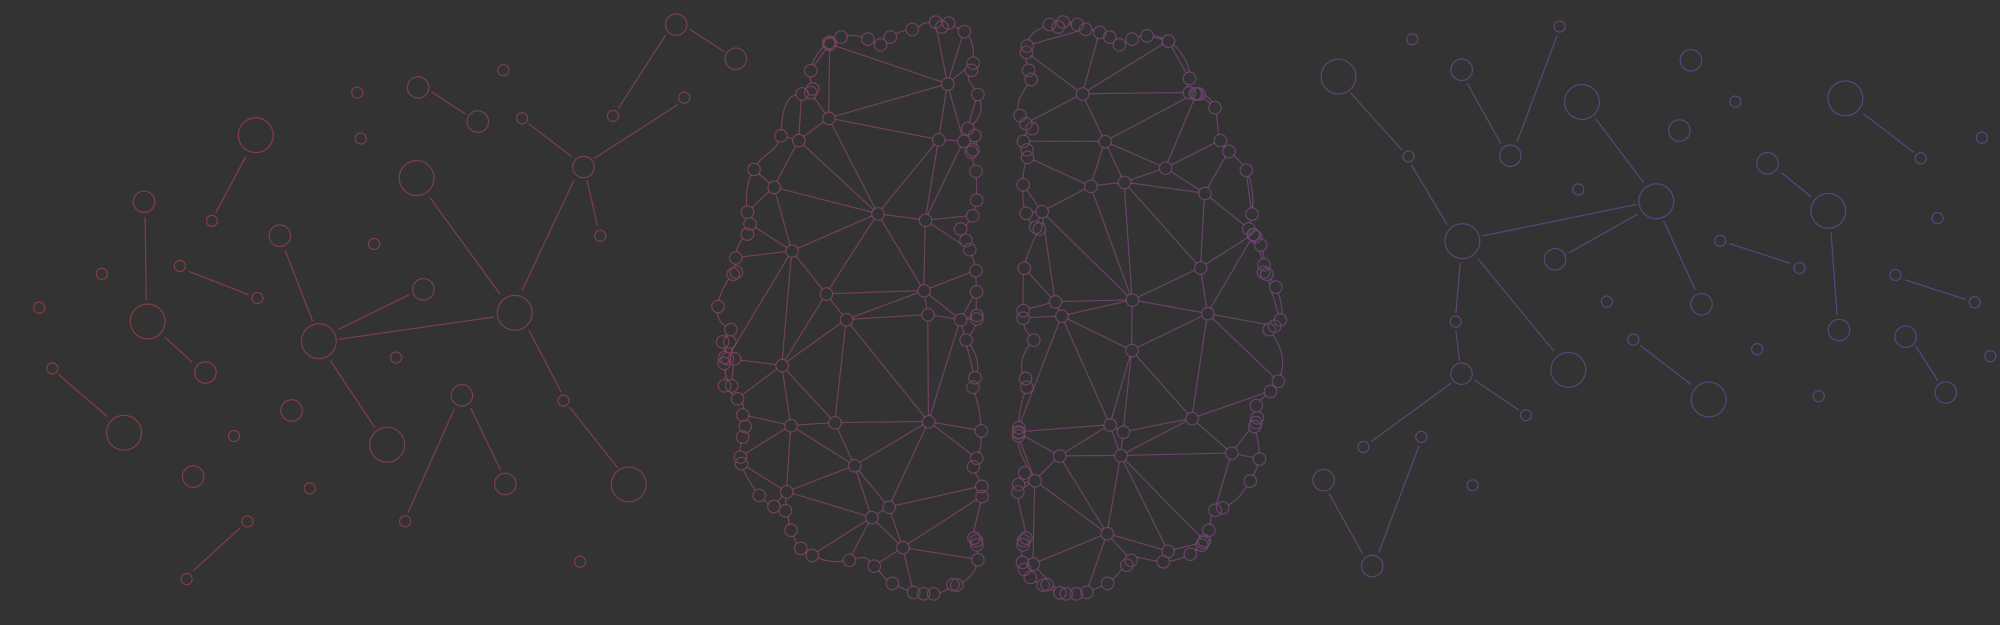 Brain networks